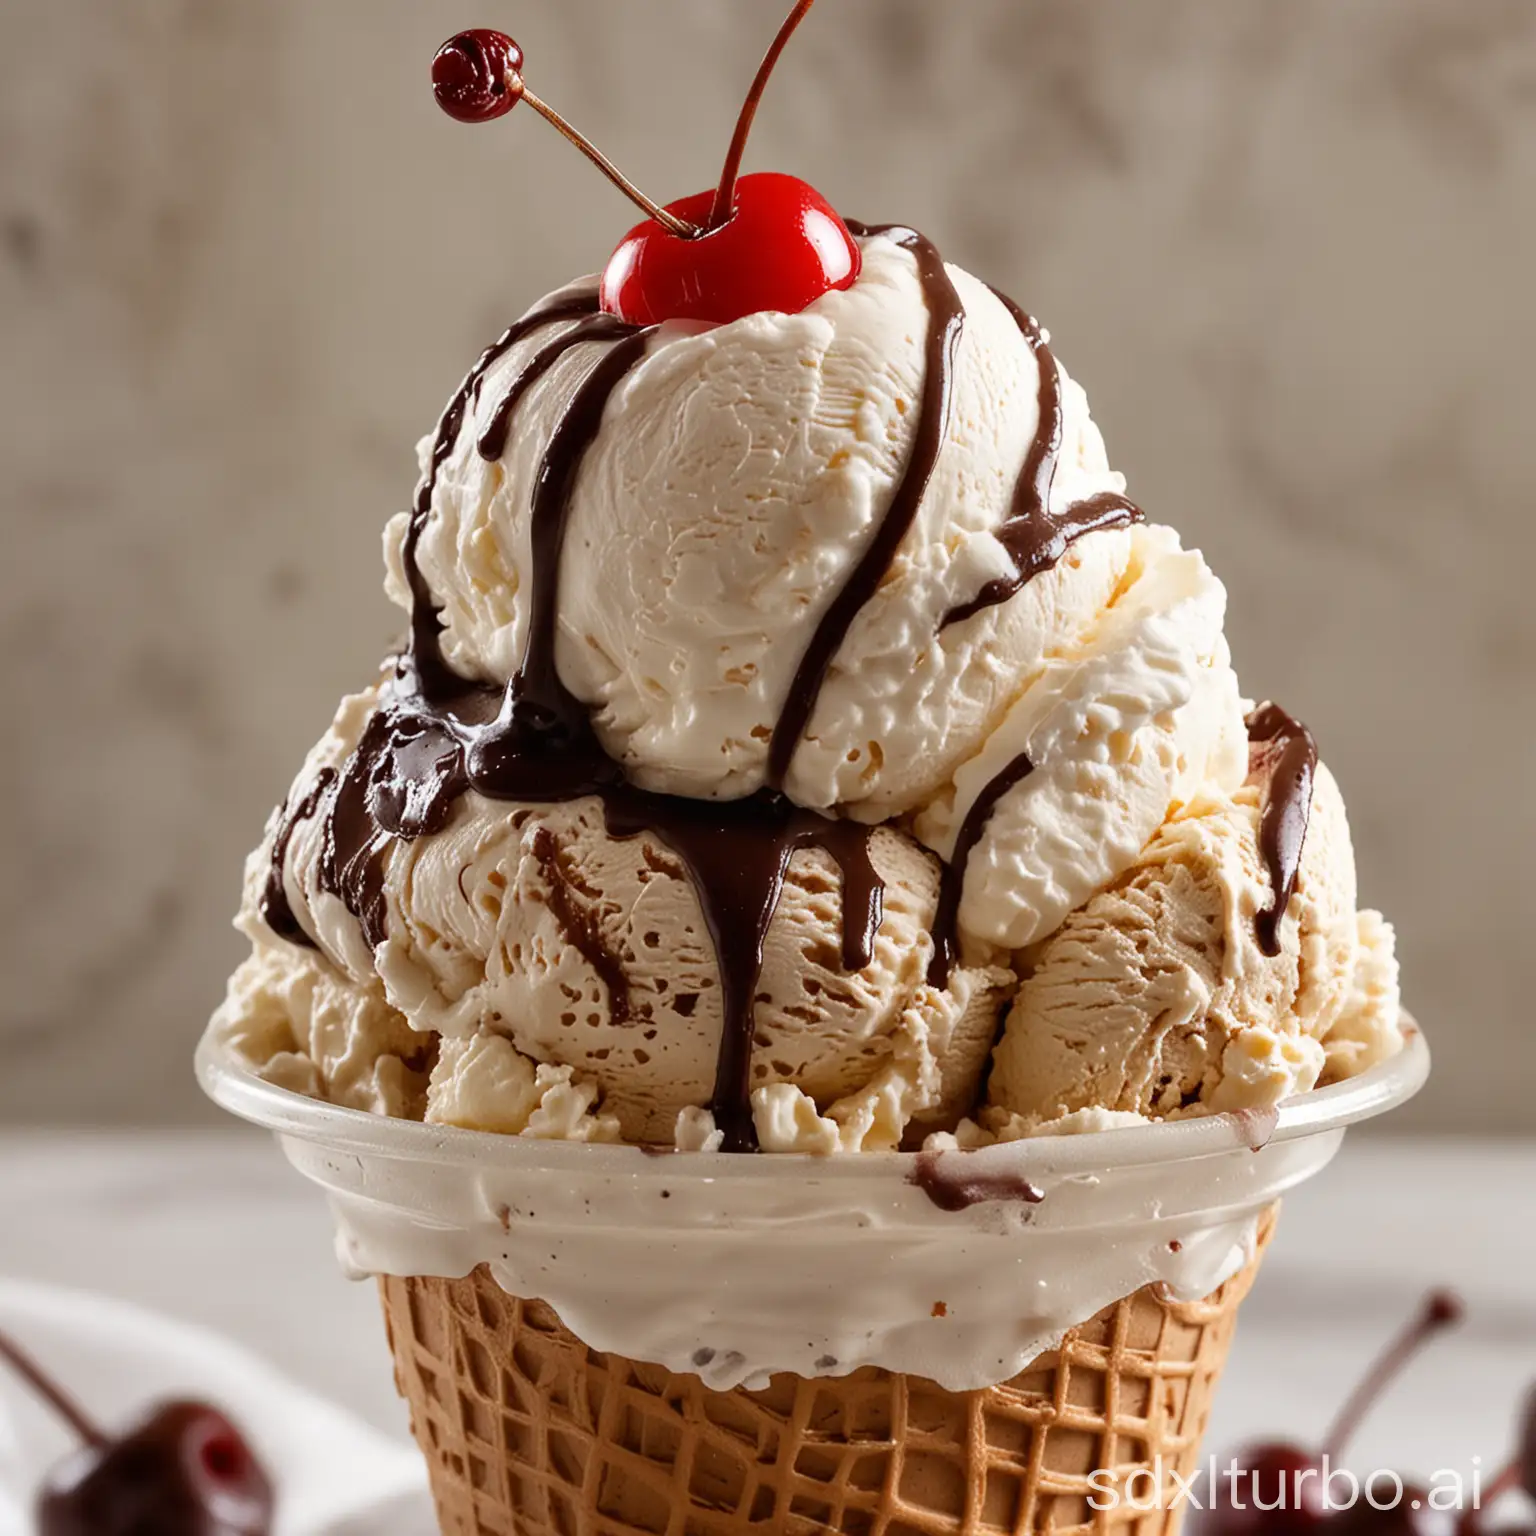 Delicious-Chocolate-and-Vanilla-Ice-Cream-Sundae-with-Whipped-Cream-and-Cherry